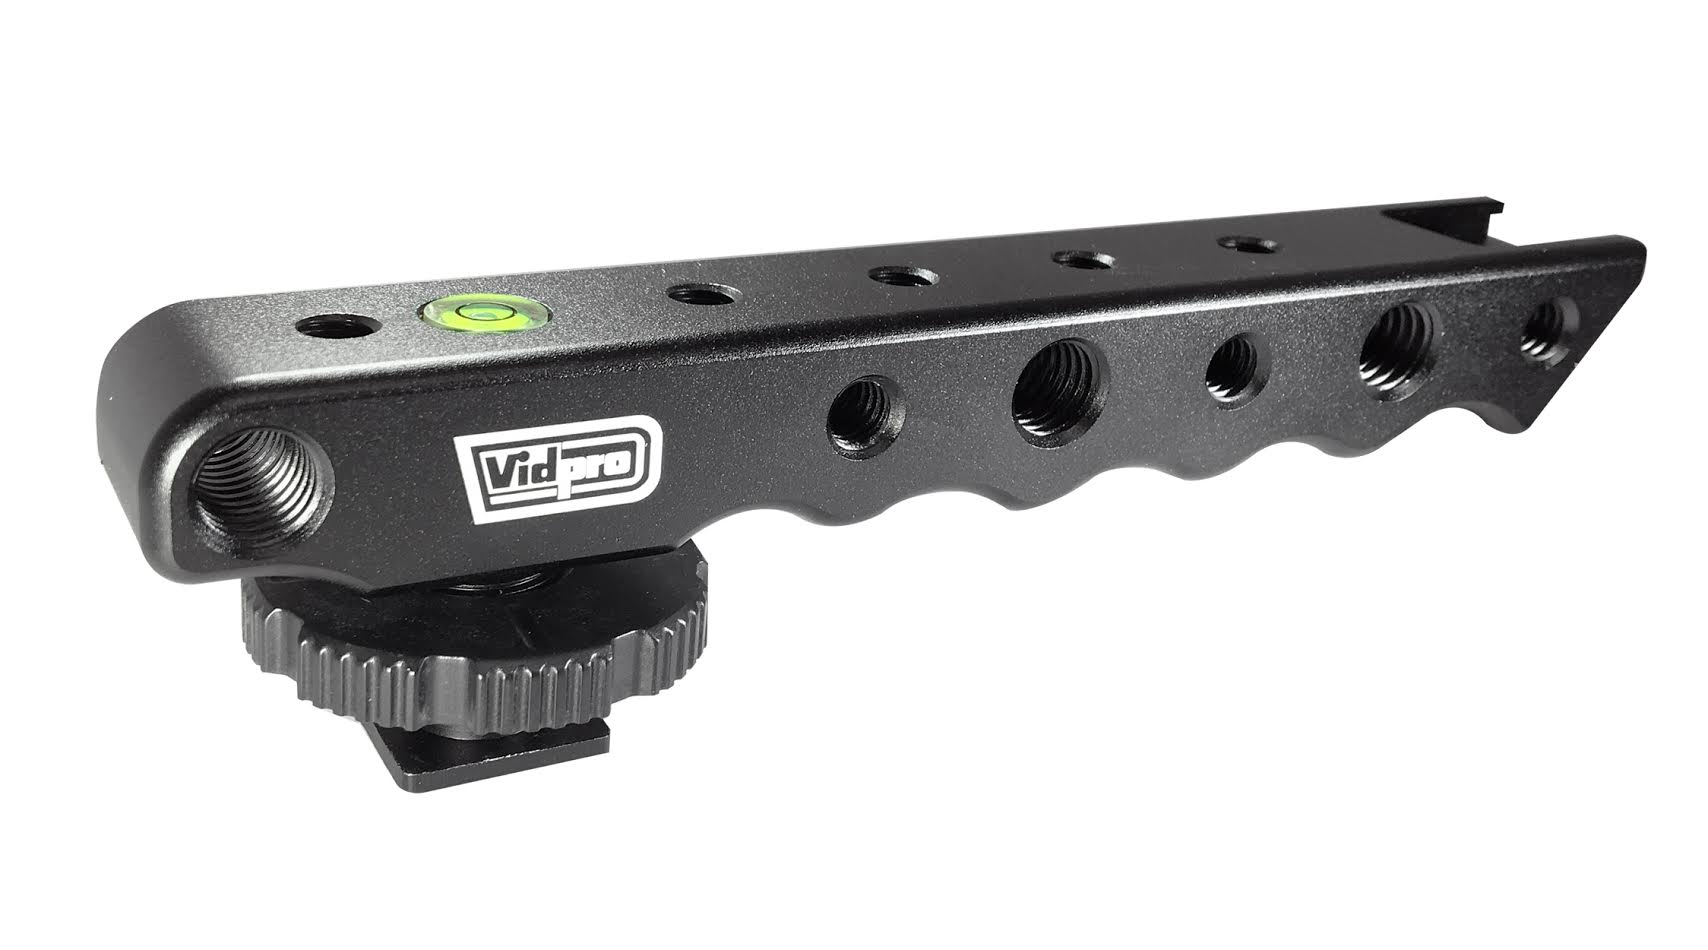 Video Stabilizers for Vivitar DVR-880 Camcorder